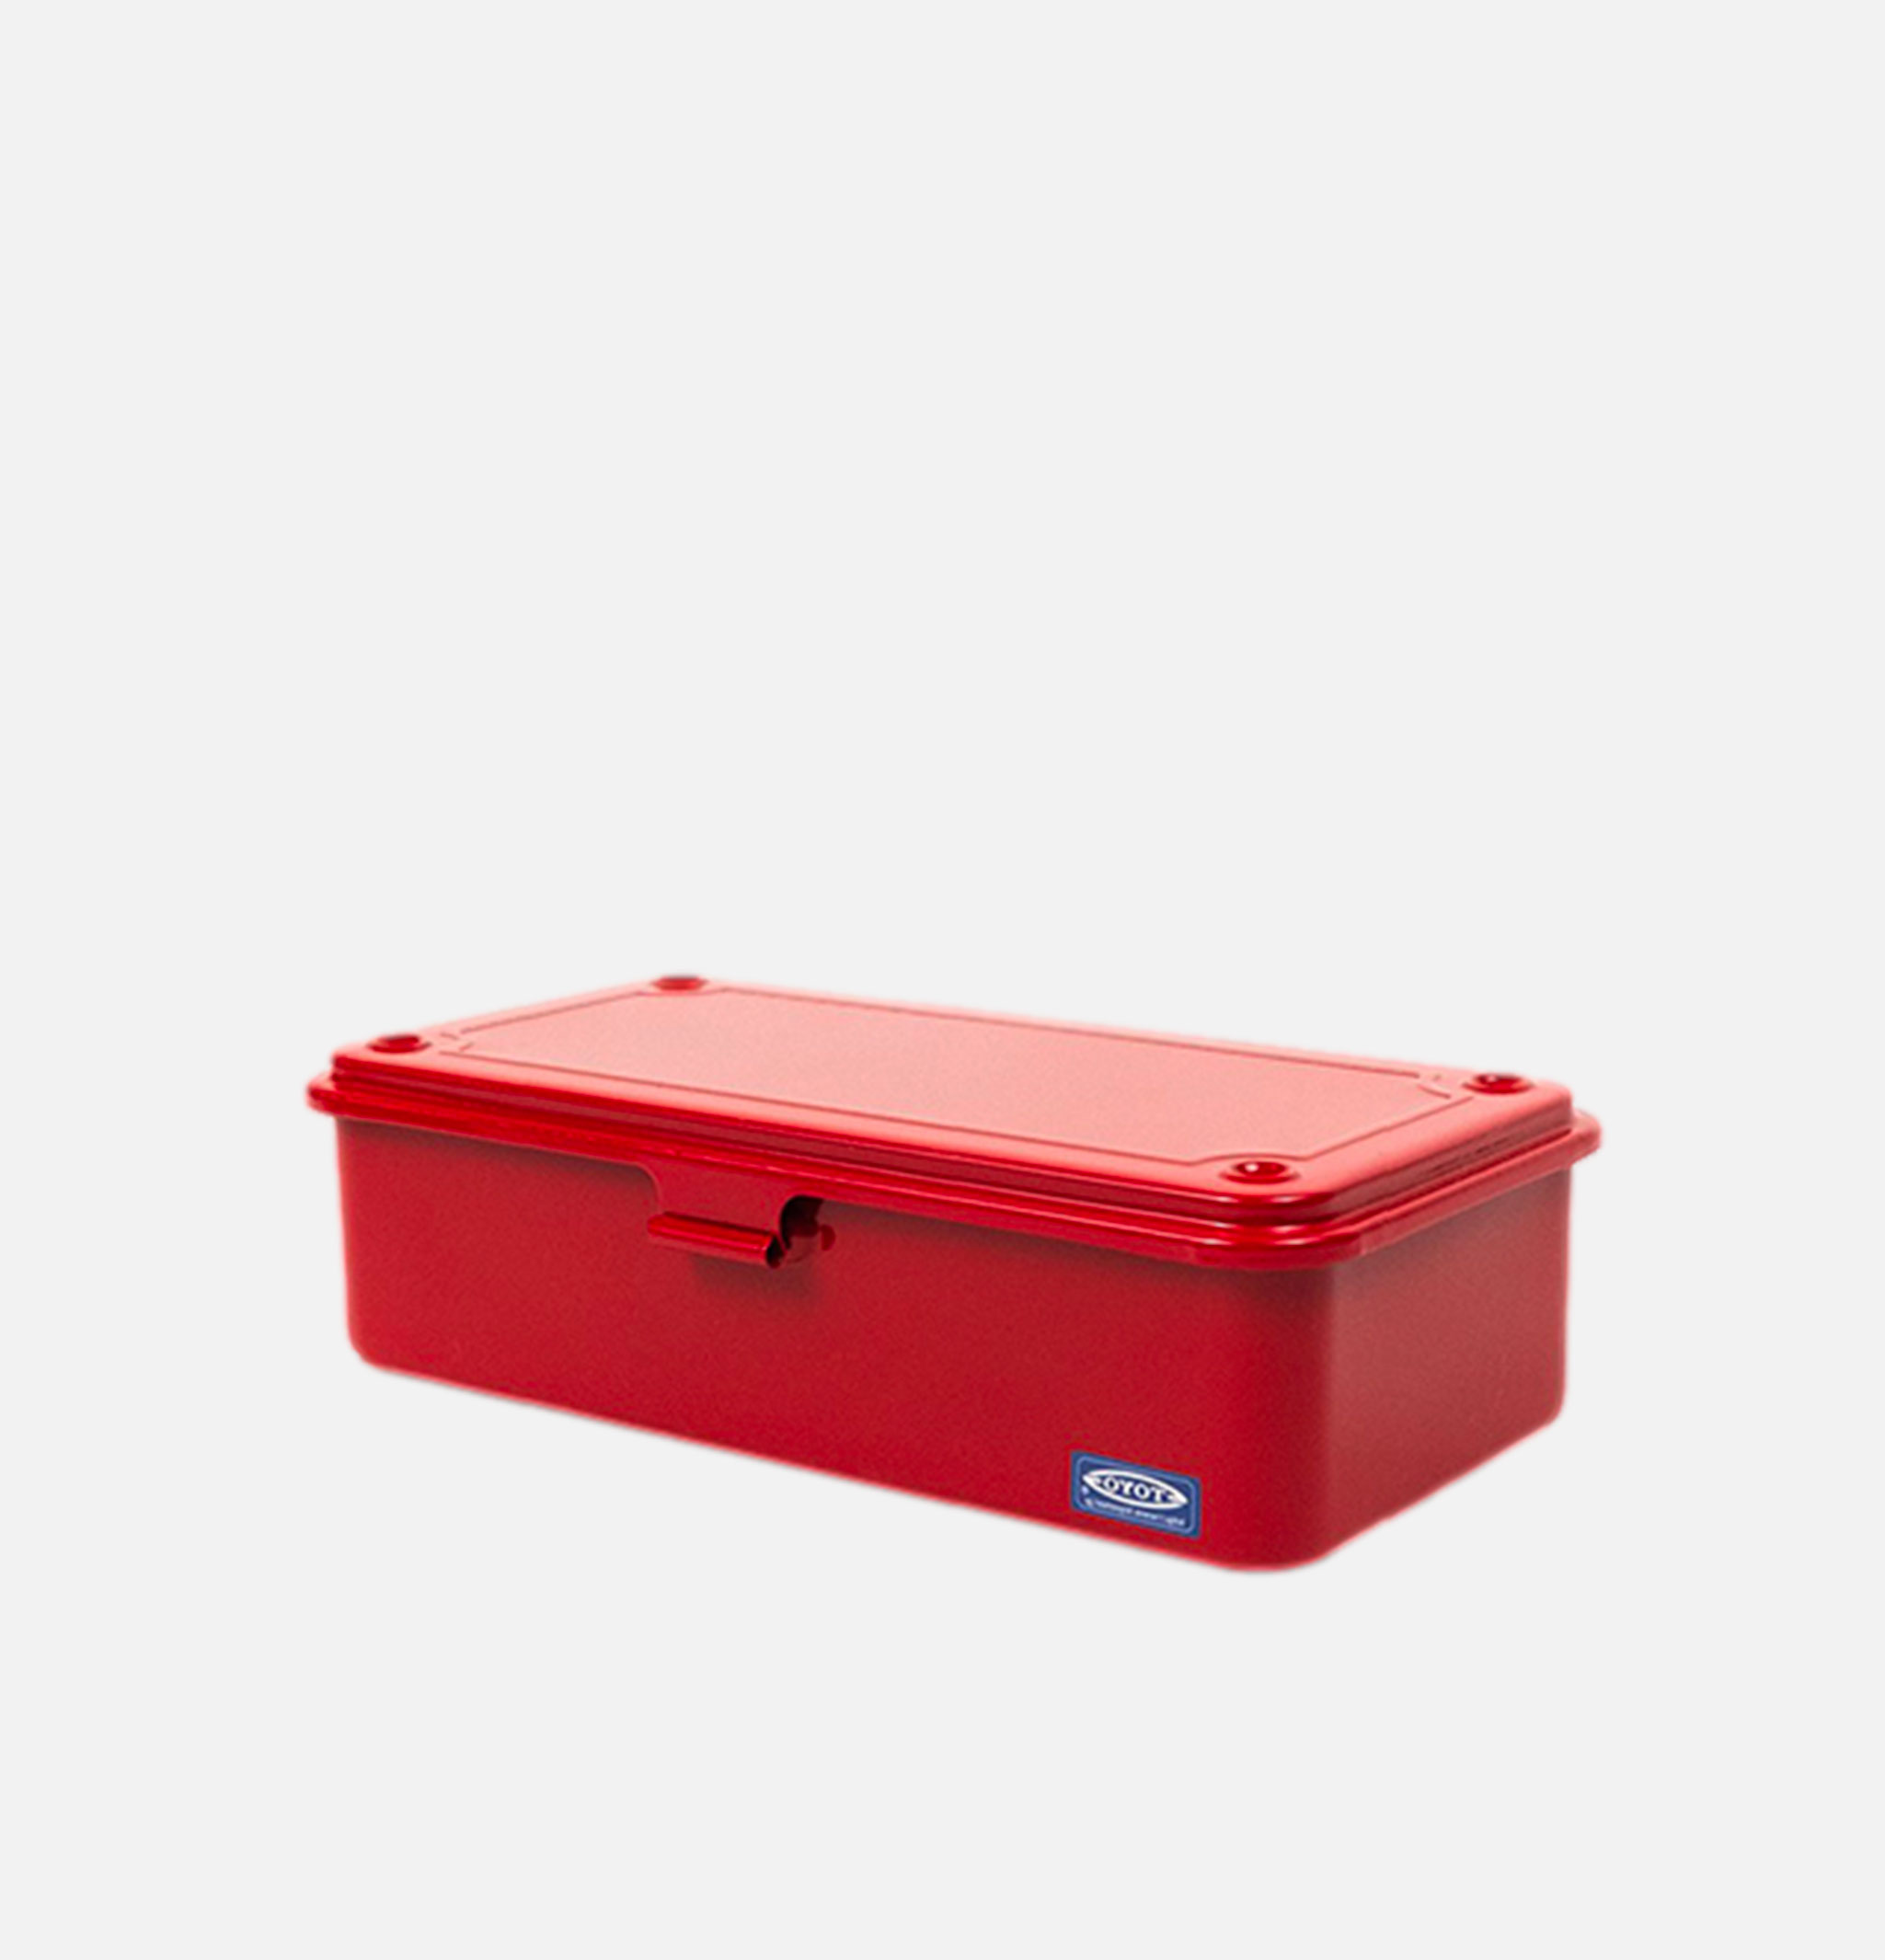 Toyo Antique Red tool box